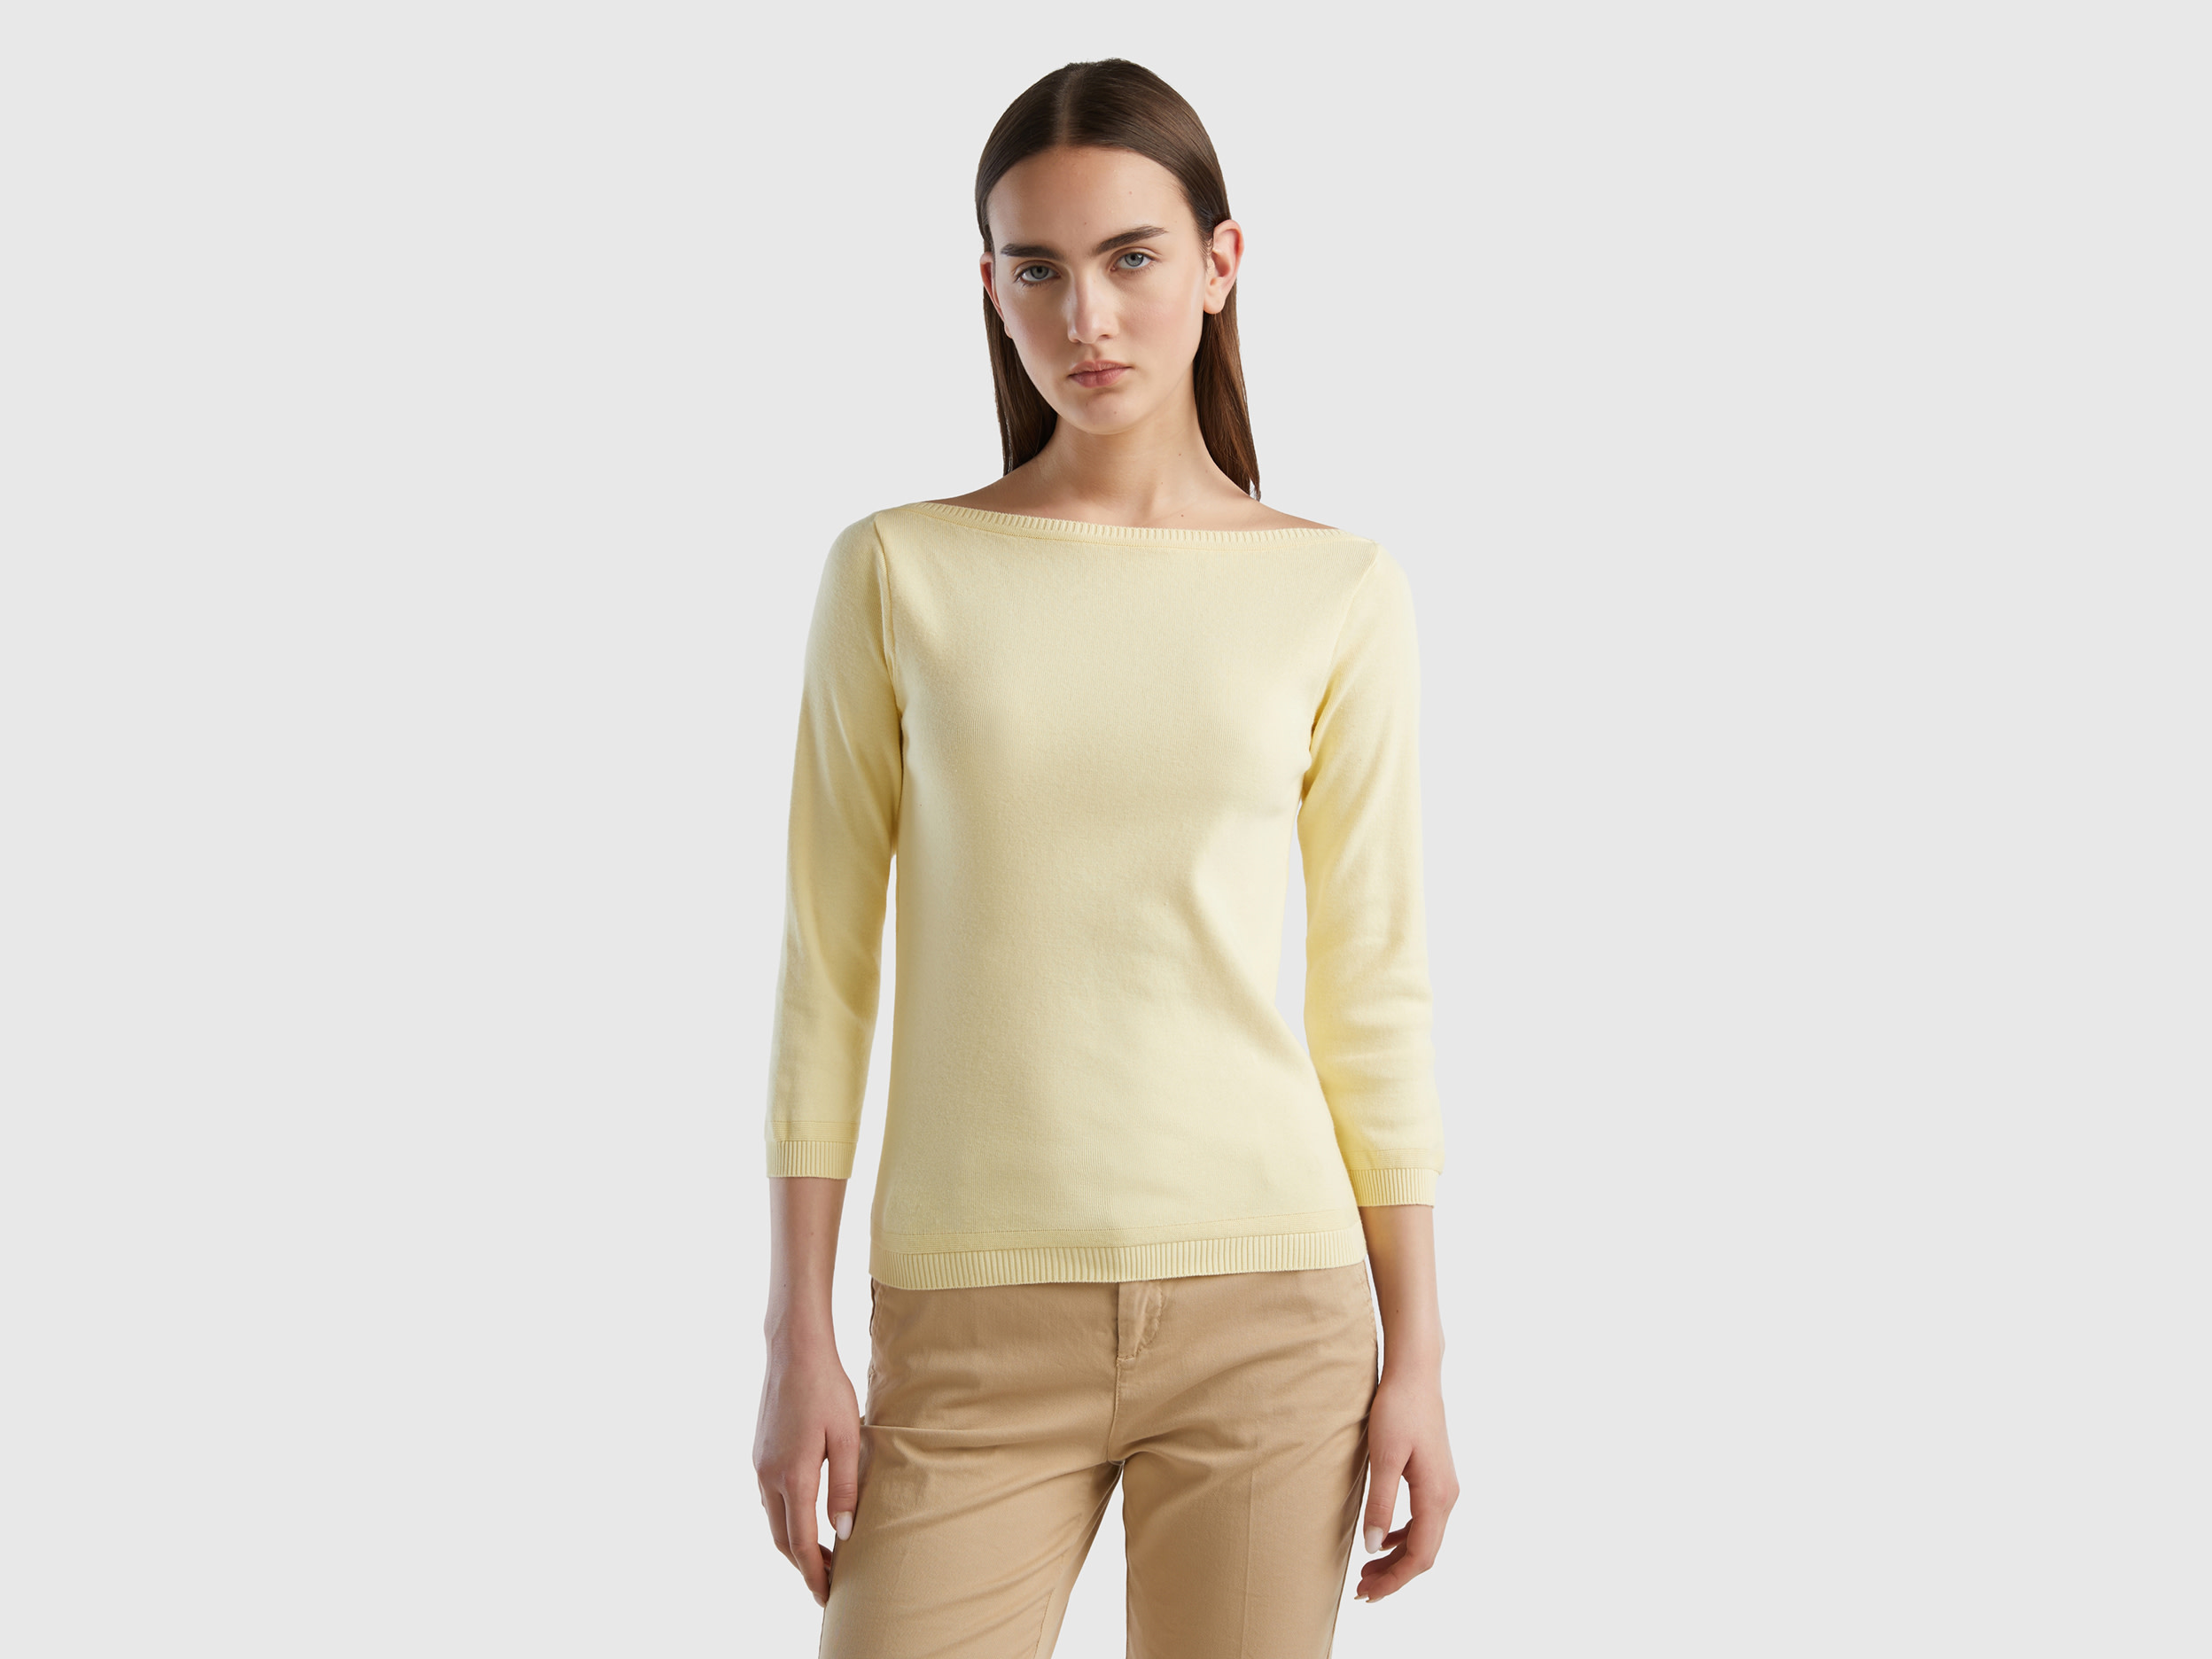 Benetton, 100% Cotton Boat Neck Sweater, size S, Yellow, Women